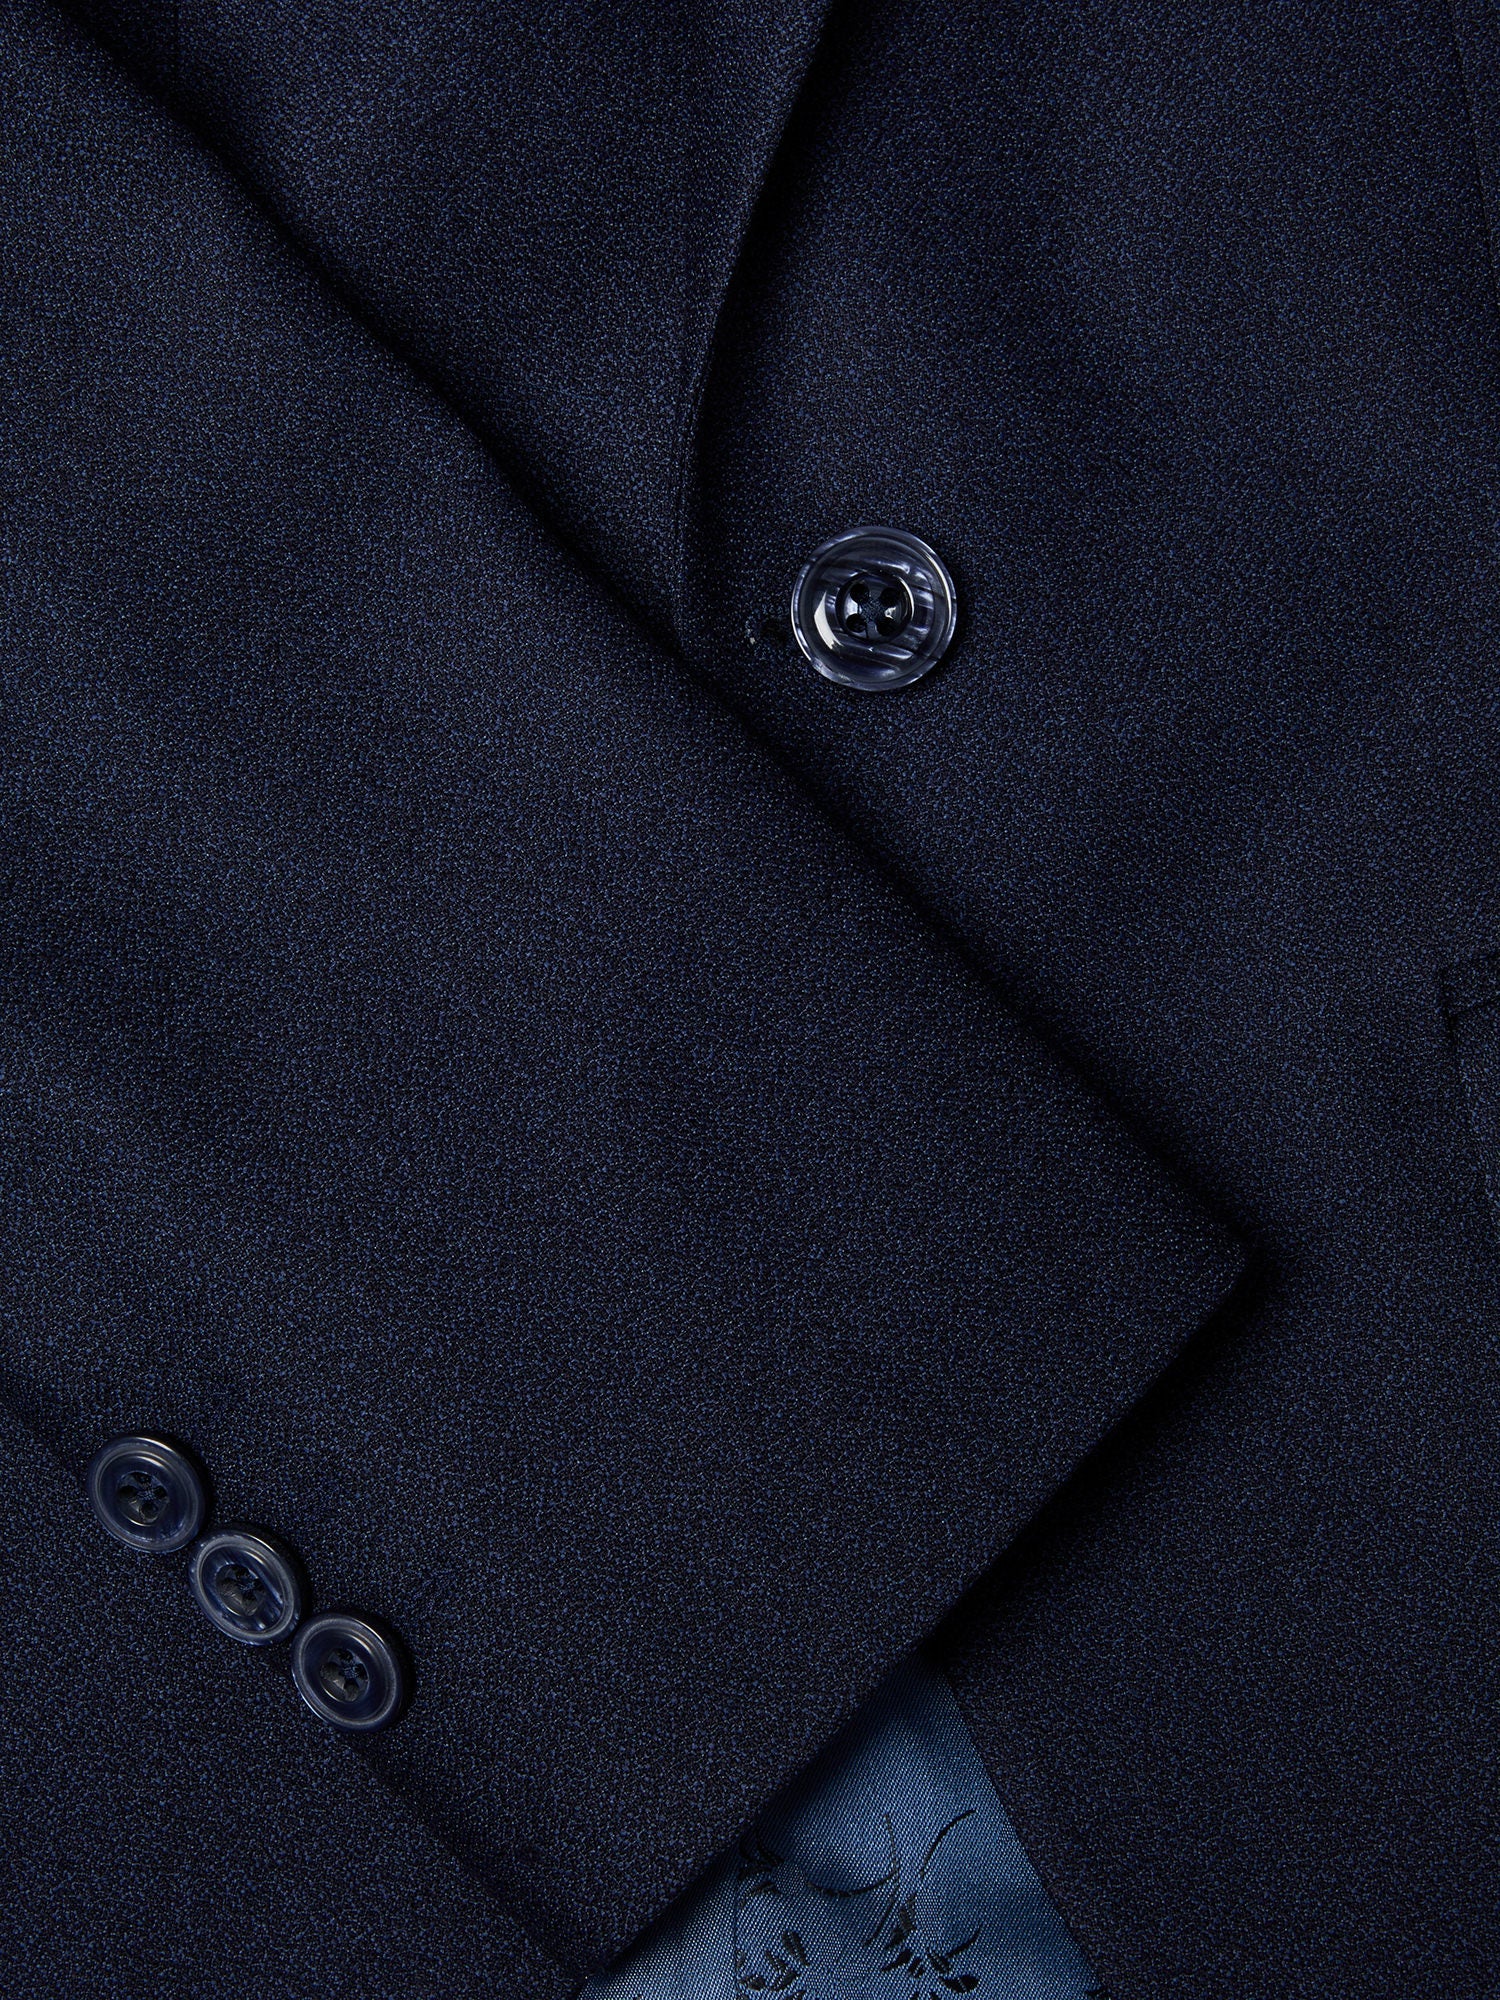 1880 Club Boys Junior Suit Jacket - Tivoli 15120 Navy 78